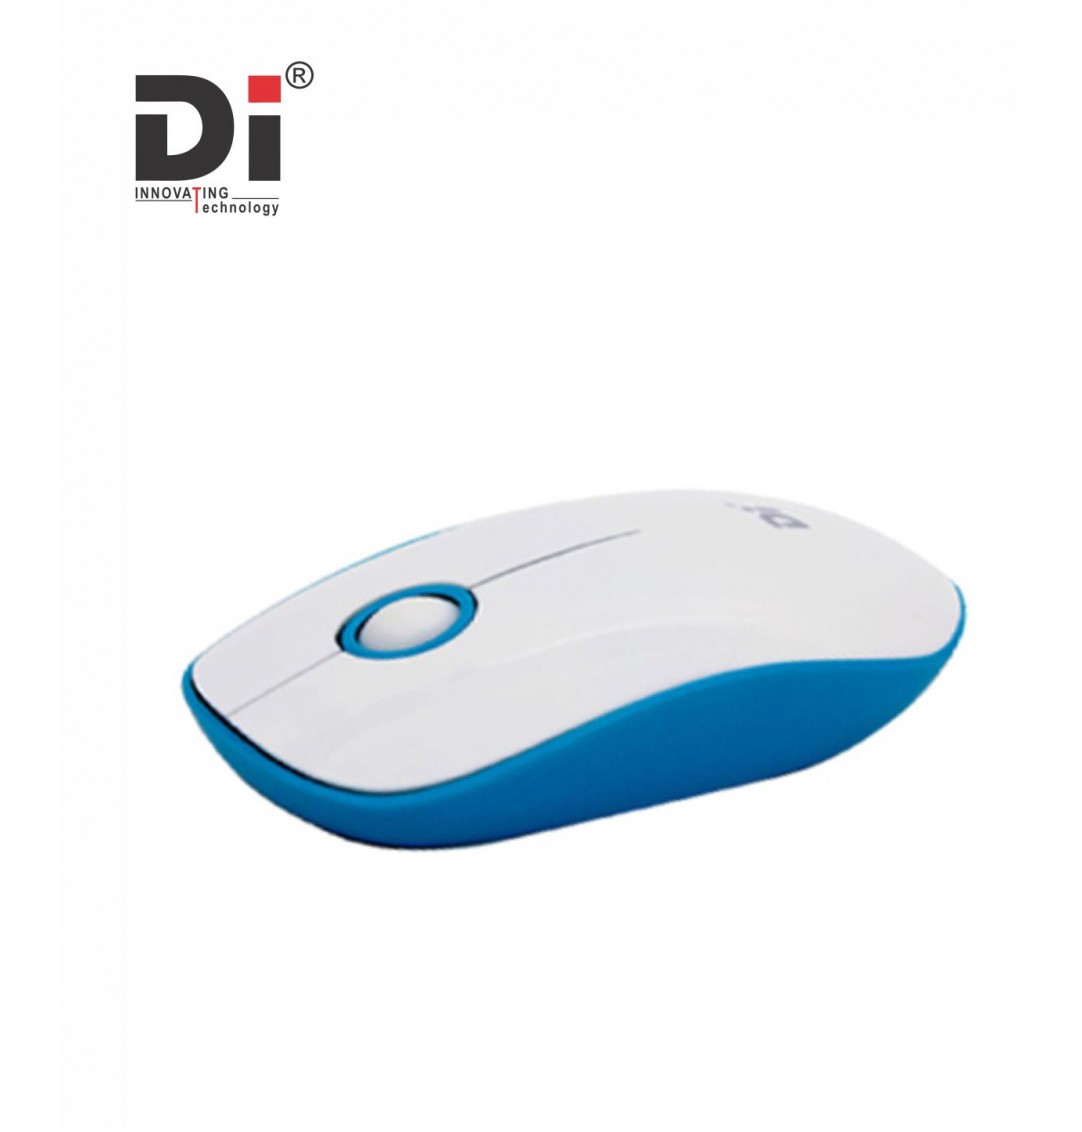 Di Wireless Mouse 410 (1 YEAR WARANTY)